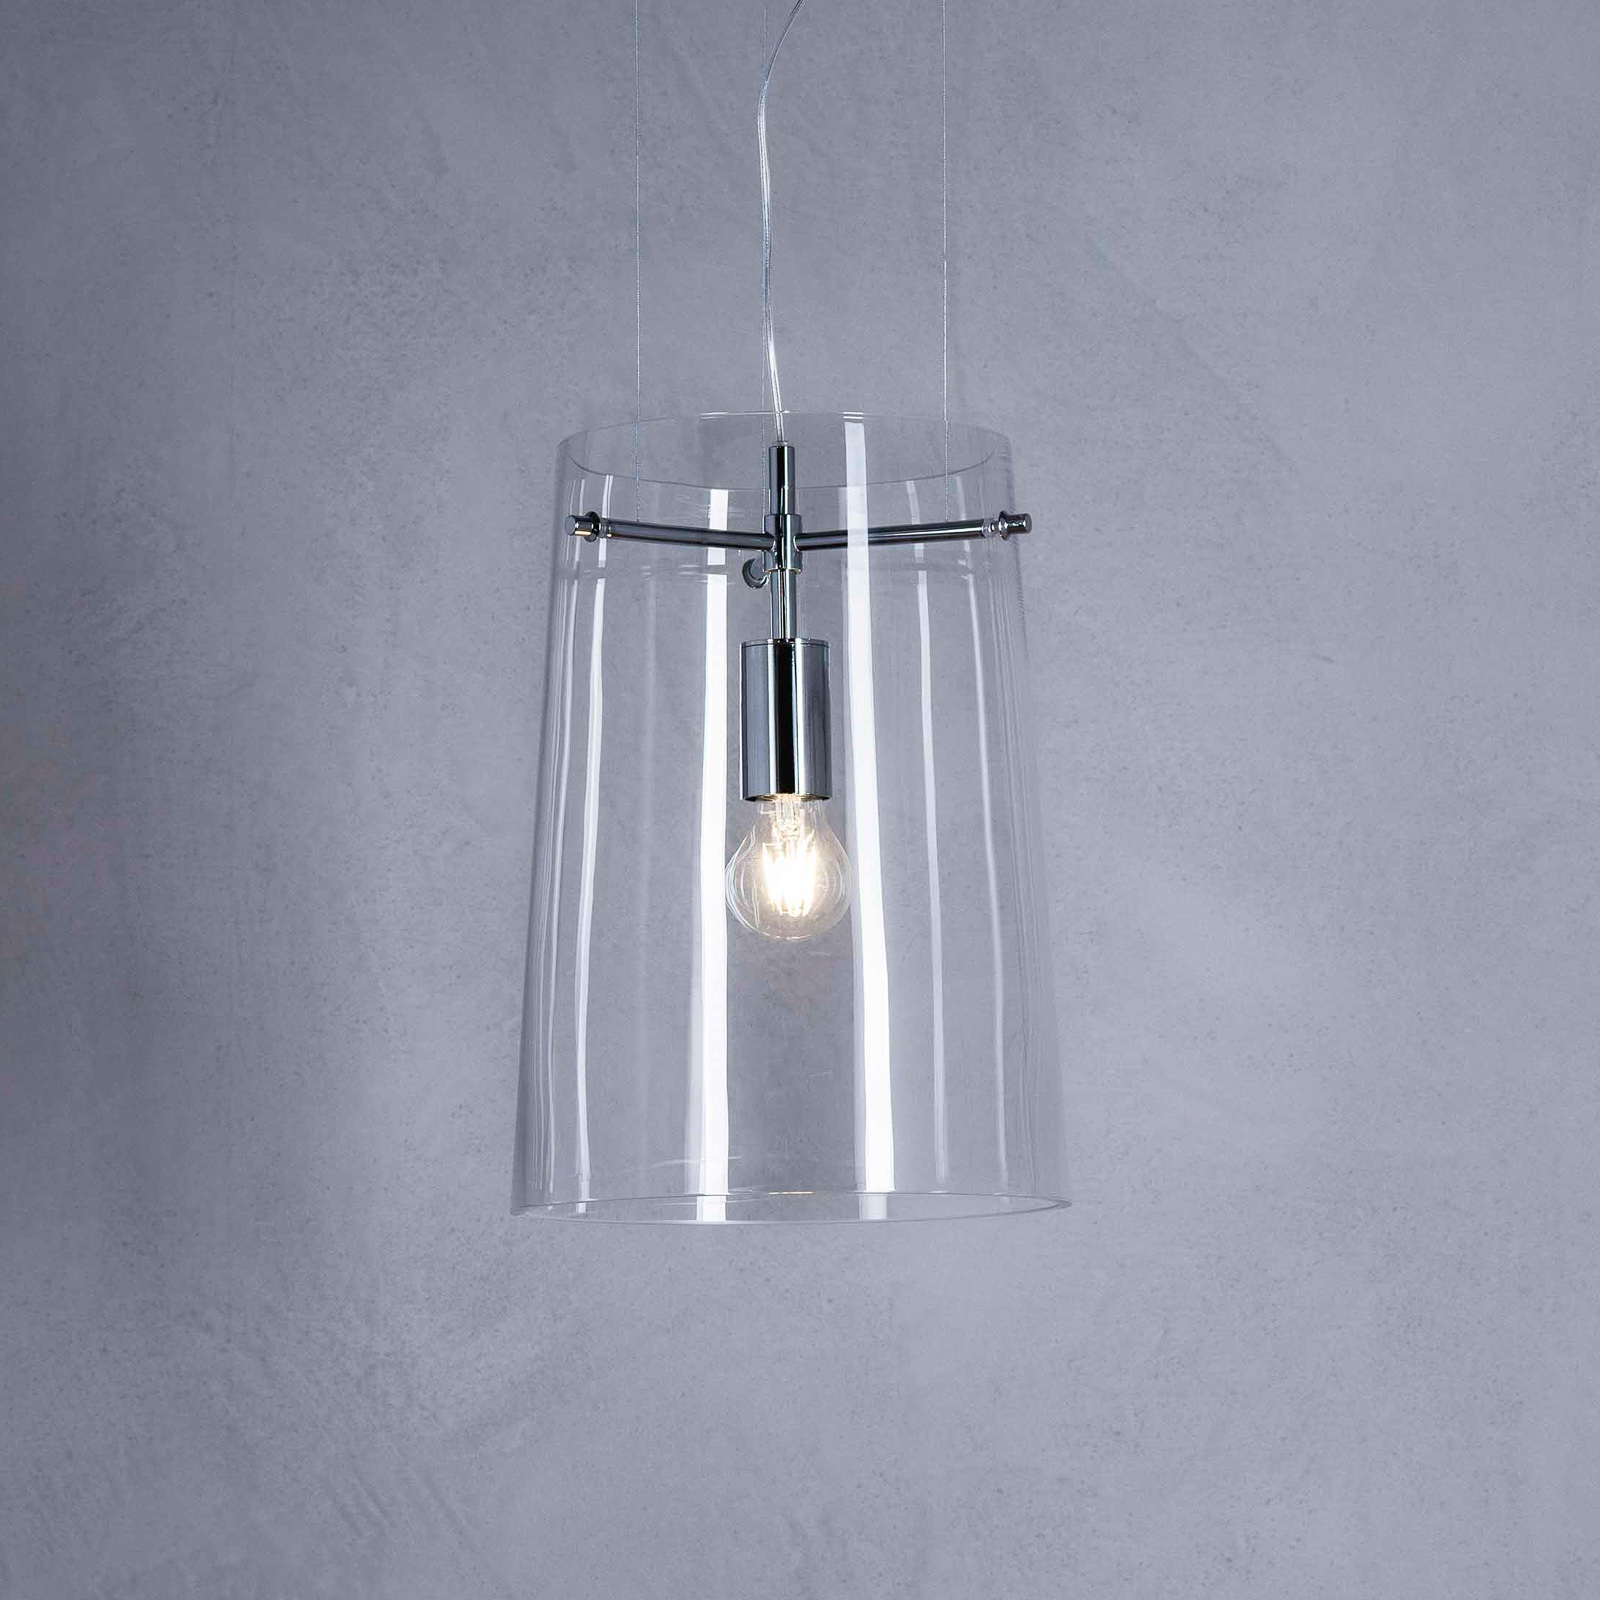 Prandina Sera S3 viseća lampa, prozirna, Ø 33 cm